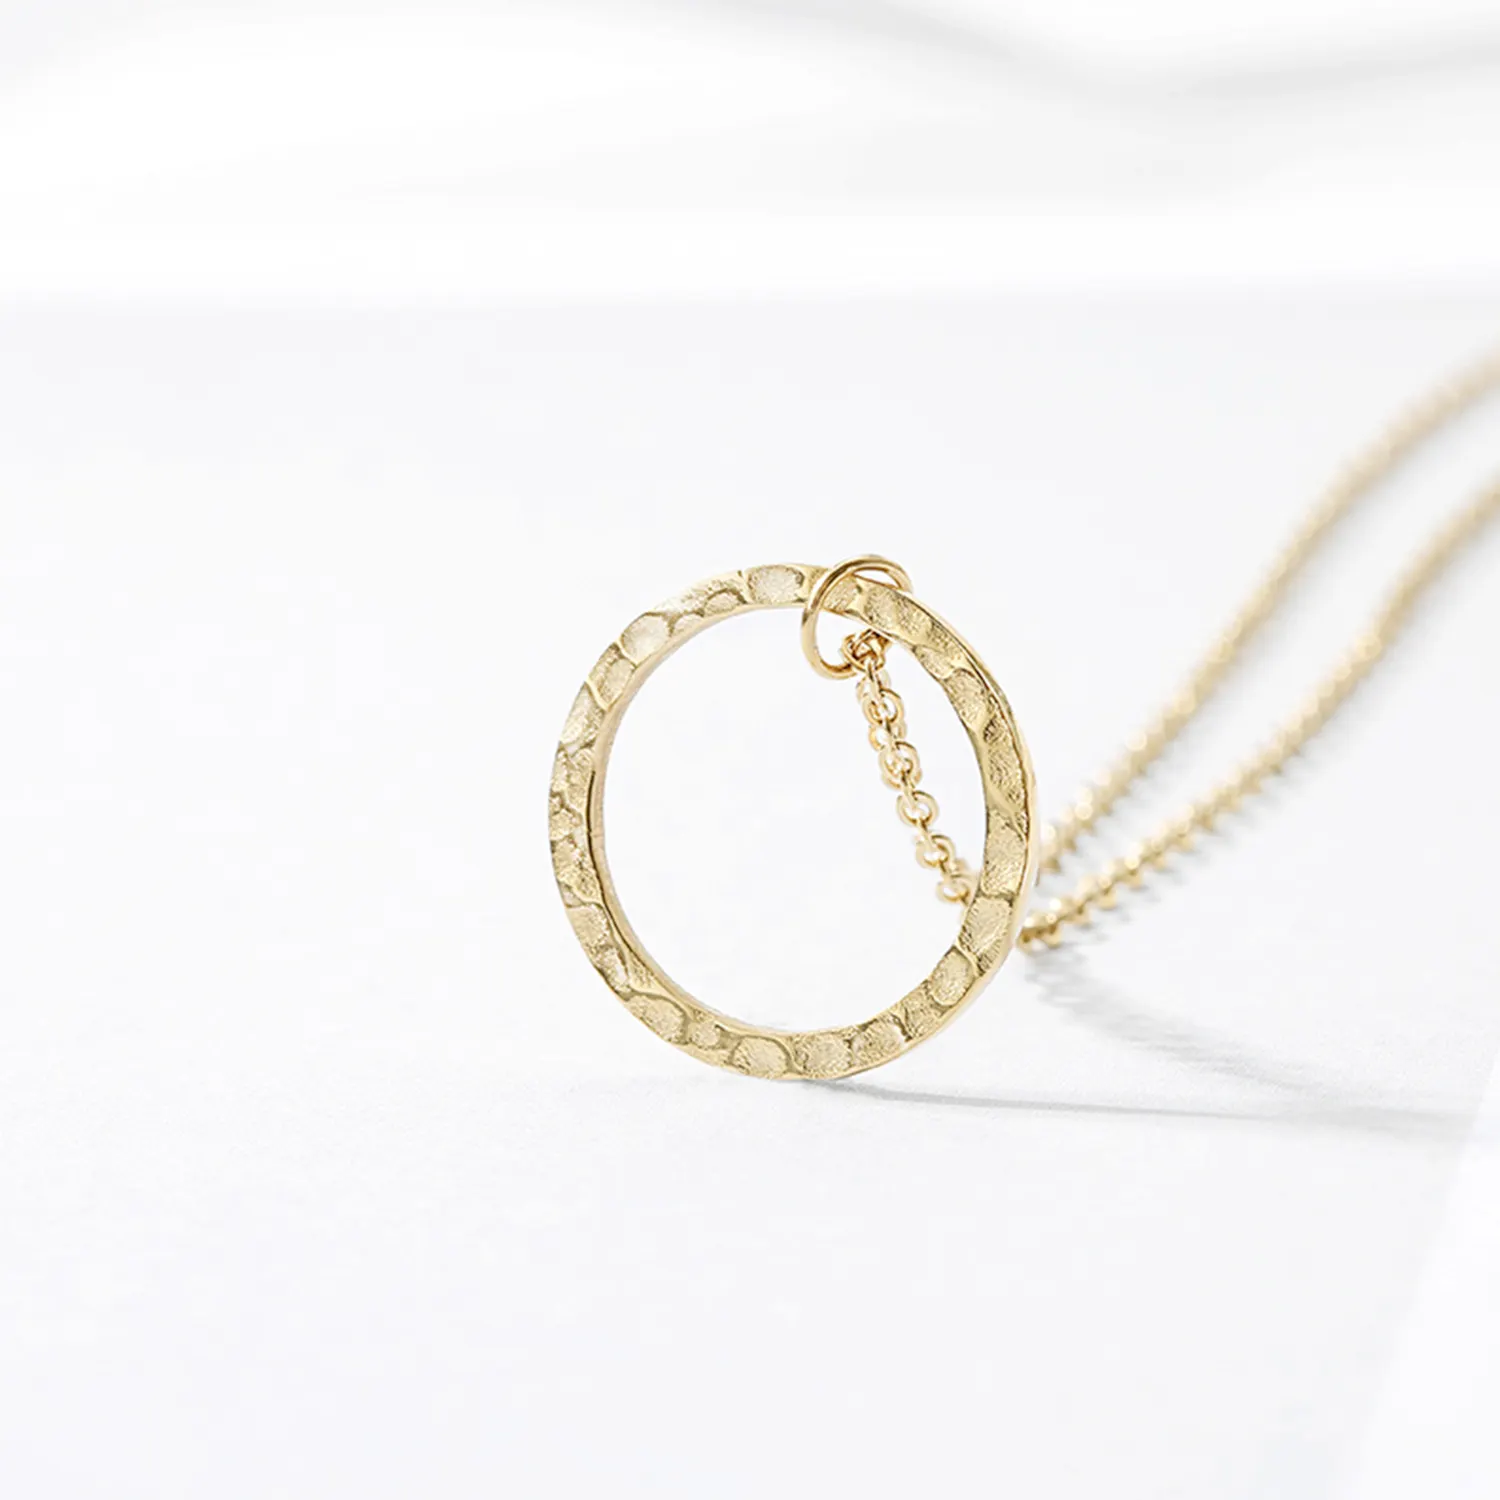 Großhandel Mode hochglanz poliert kreisförmig Gold Verkäufer Schmuck Halskette 316 L Edelstahl Mädchen